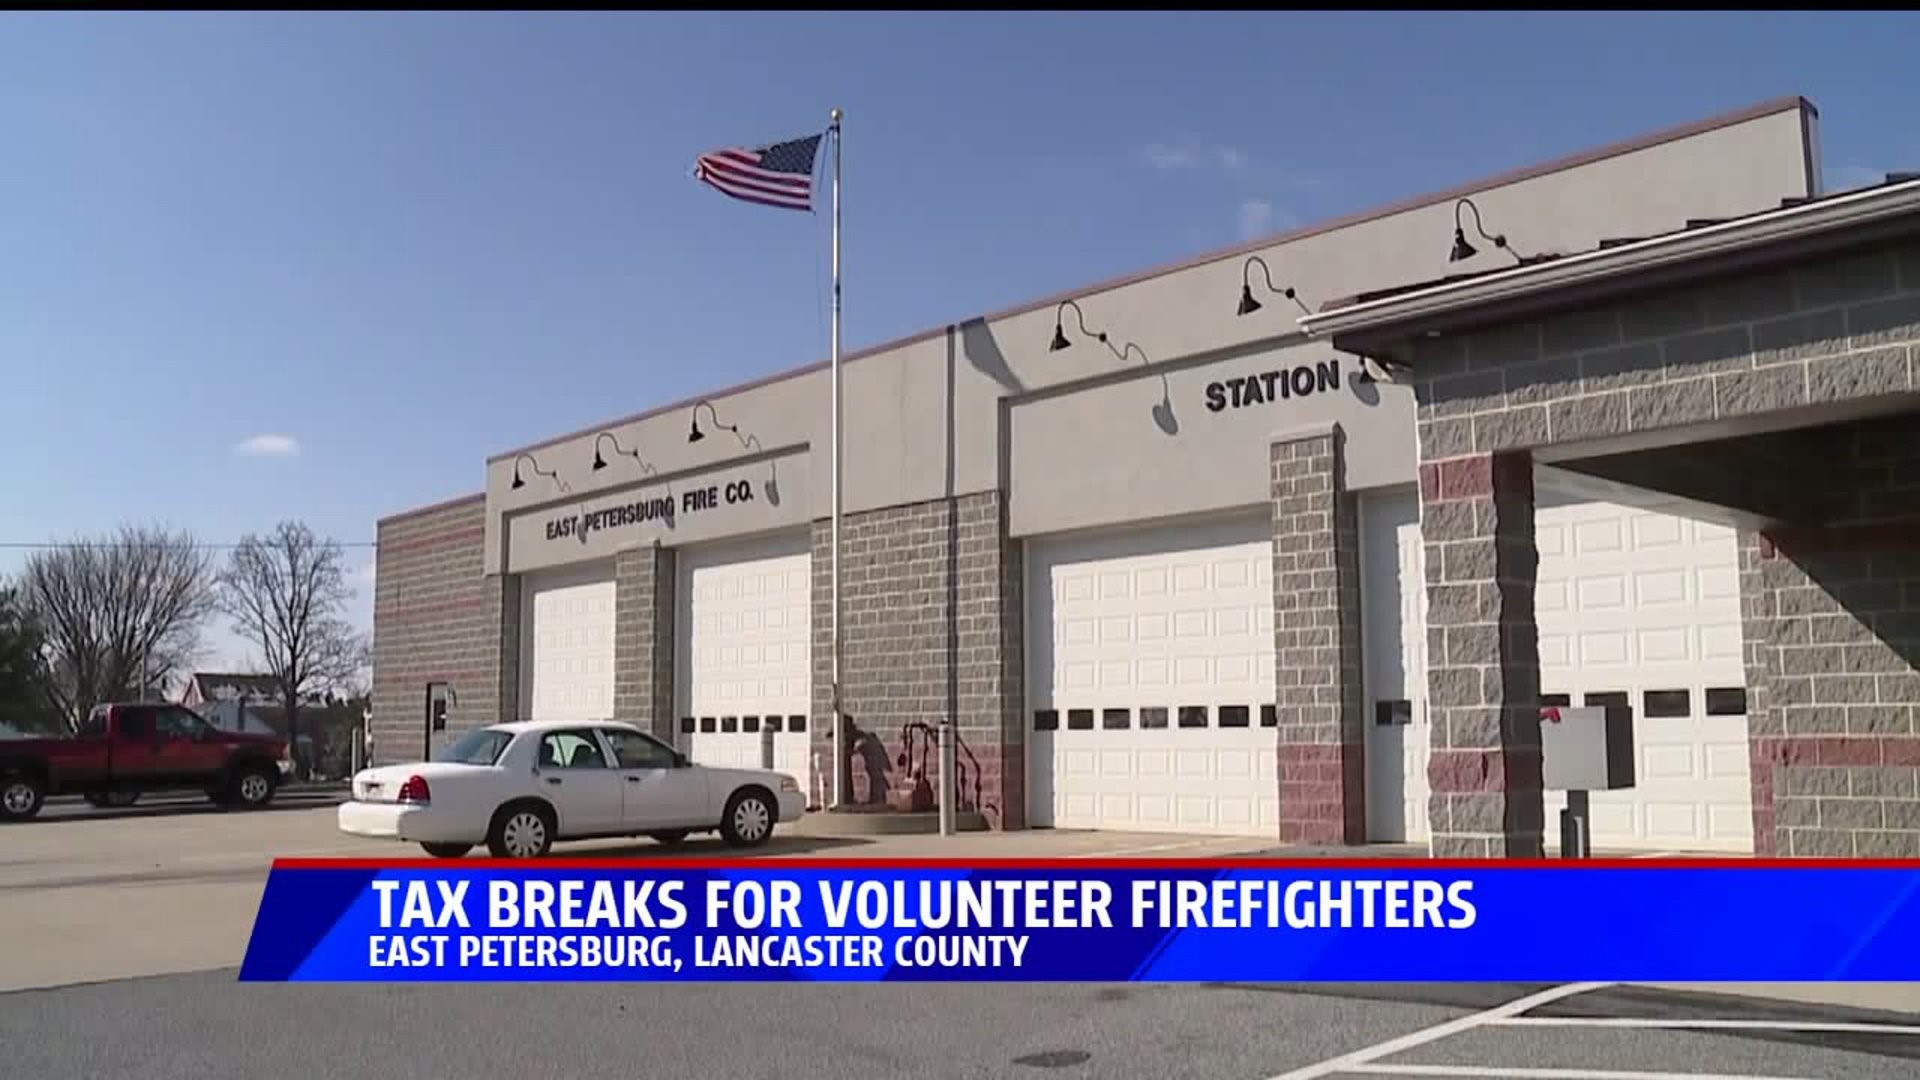 Tax breaks for volunteer firefighters